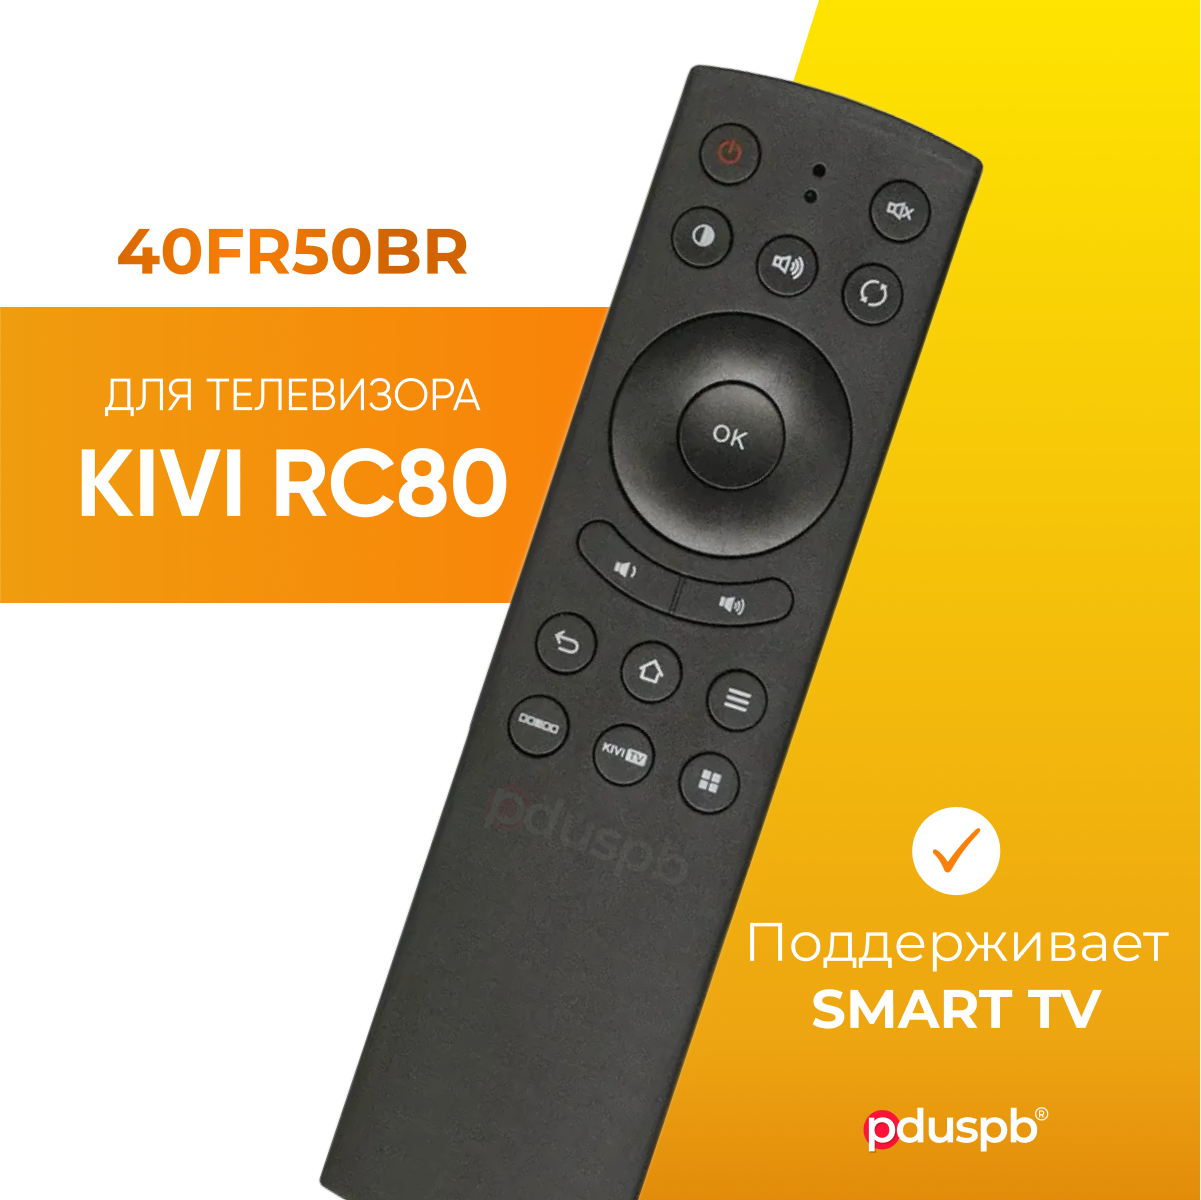 Пульт ду для телевизора Kivi RC80 (40FR50BR) Smart TV